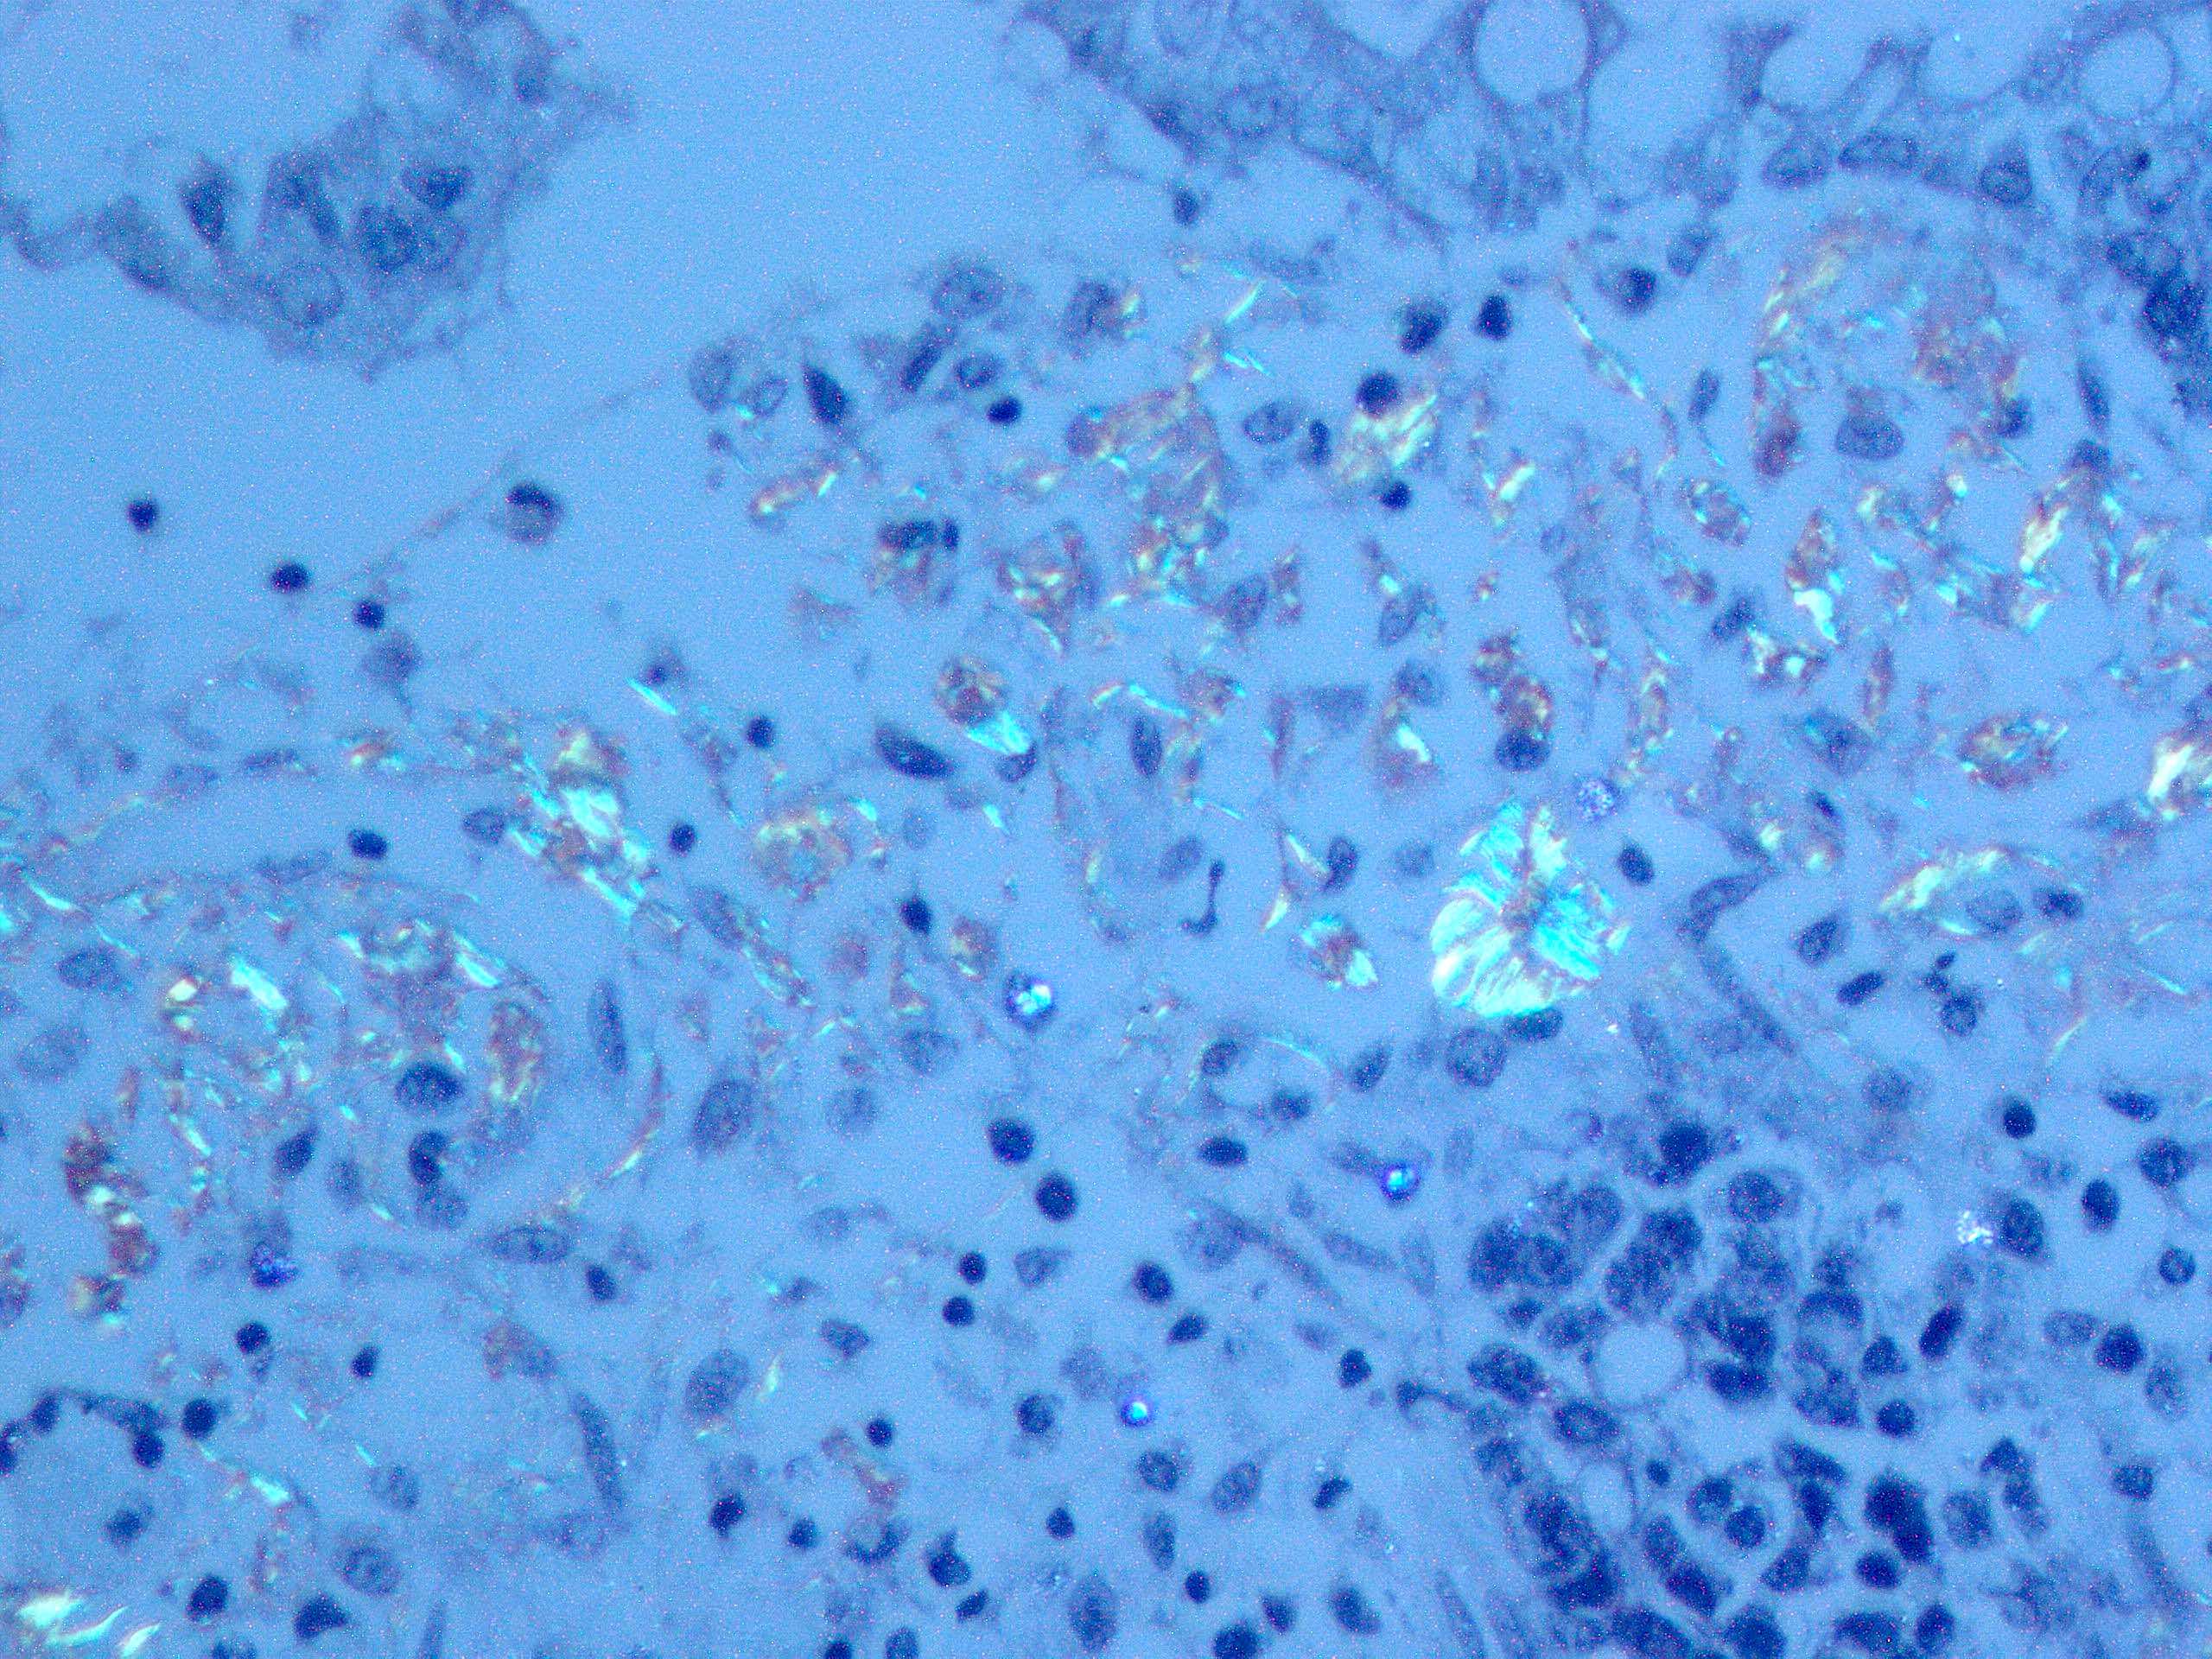 Recurrent amyloidosis in allograft, Congo stain polarized microscopy